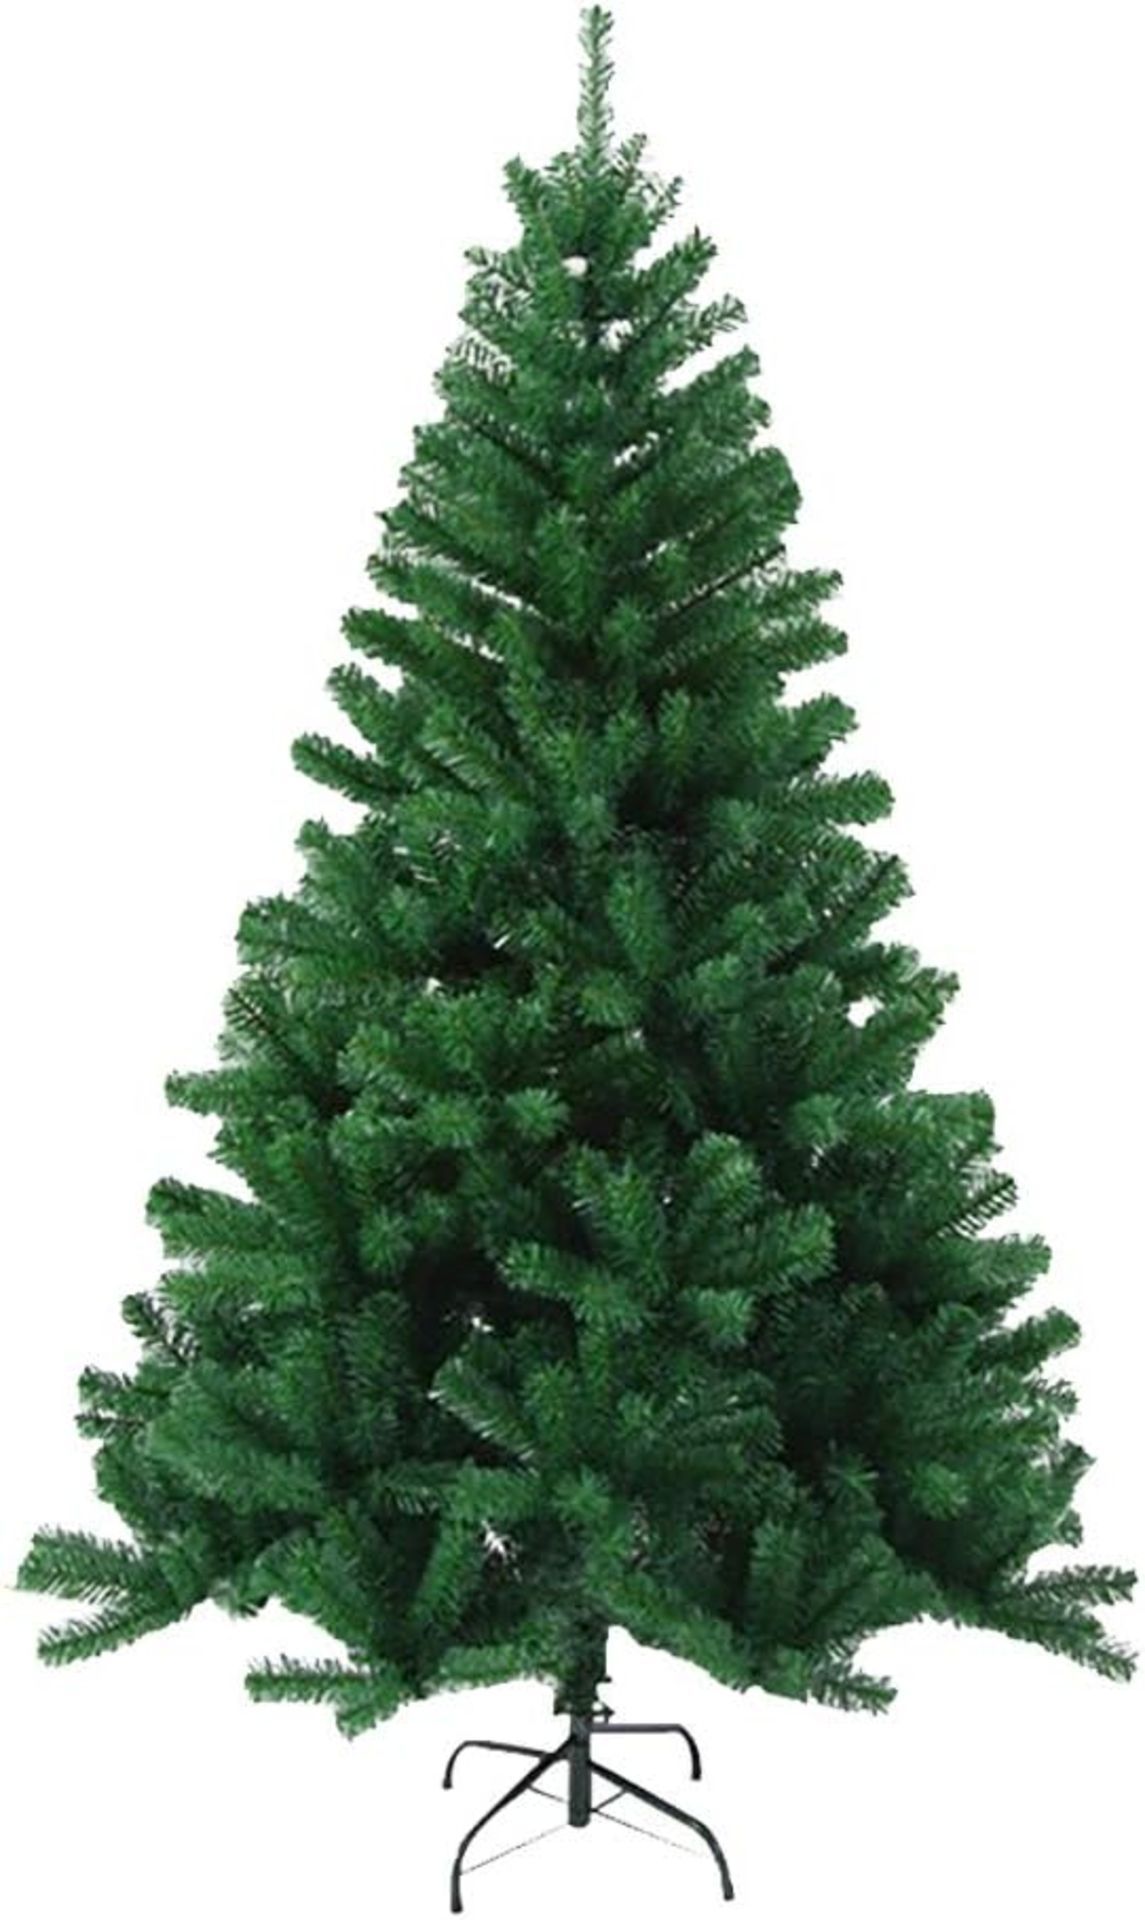 3 x Brand New Luxury 6ft Green 700 Tip Christmas Trees